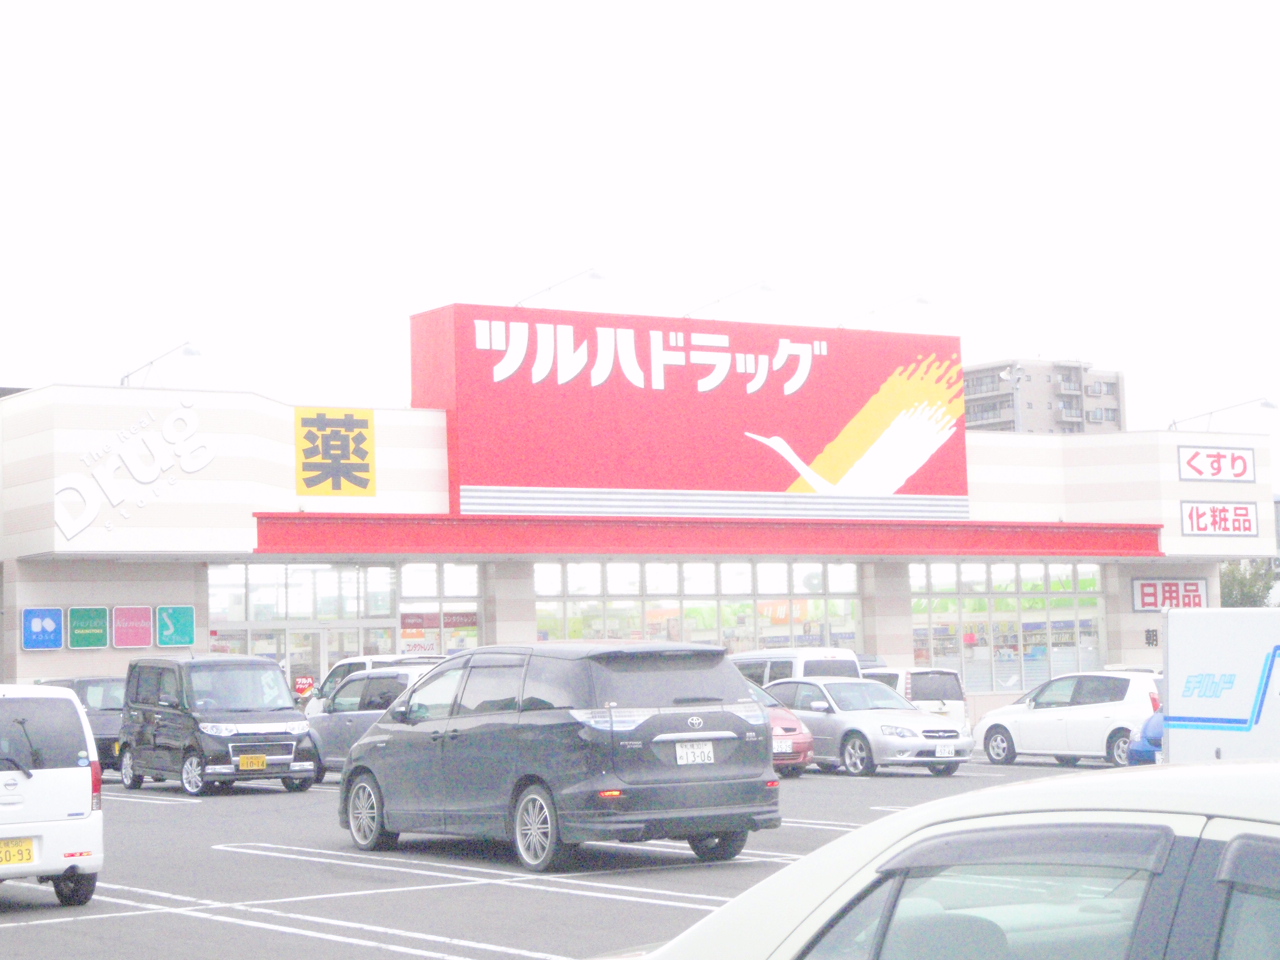 Dorakkusutoa. Tsuruha drag Asari shop 778m until (drugstore)